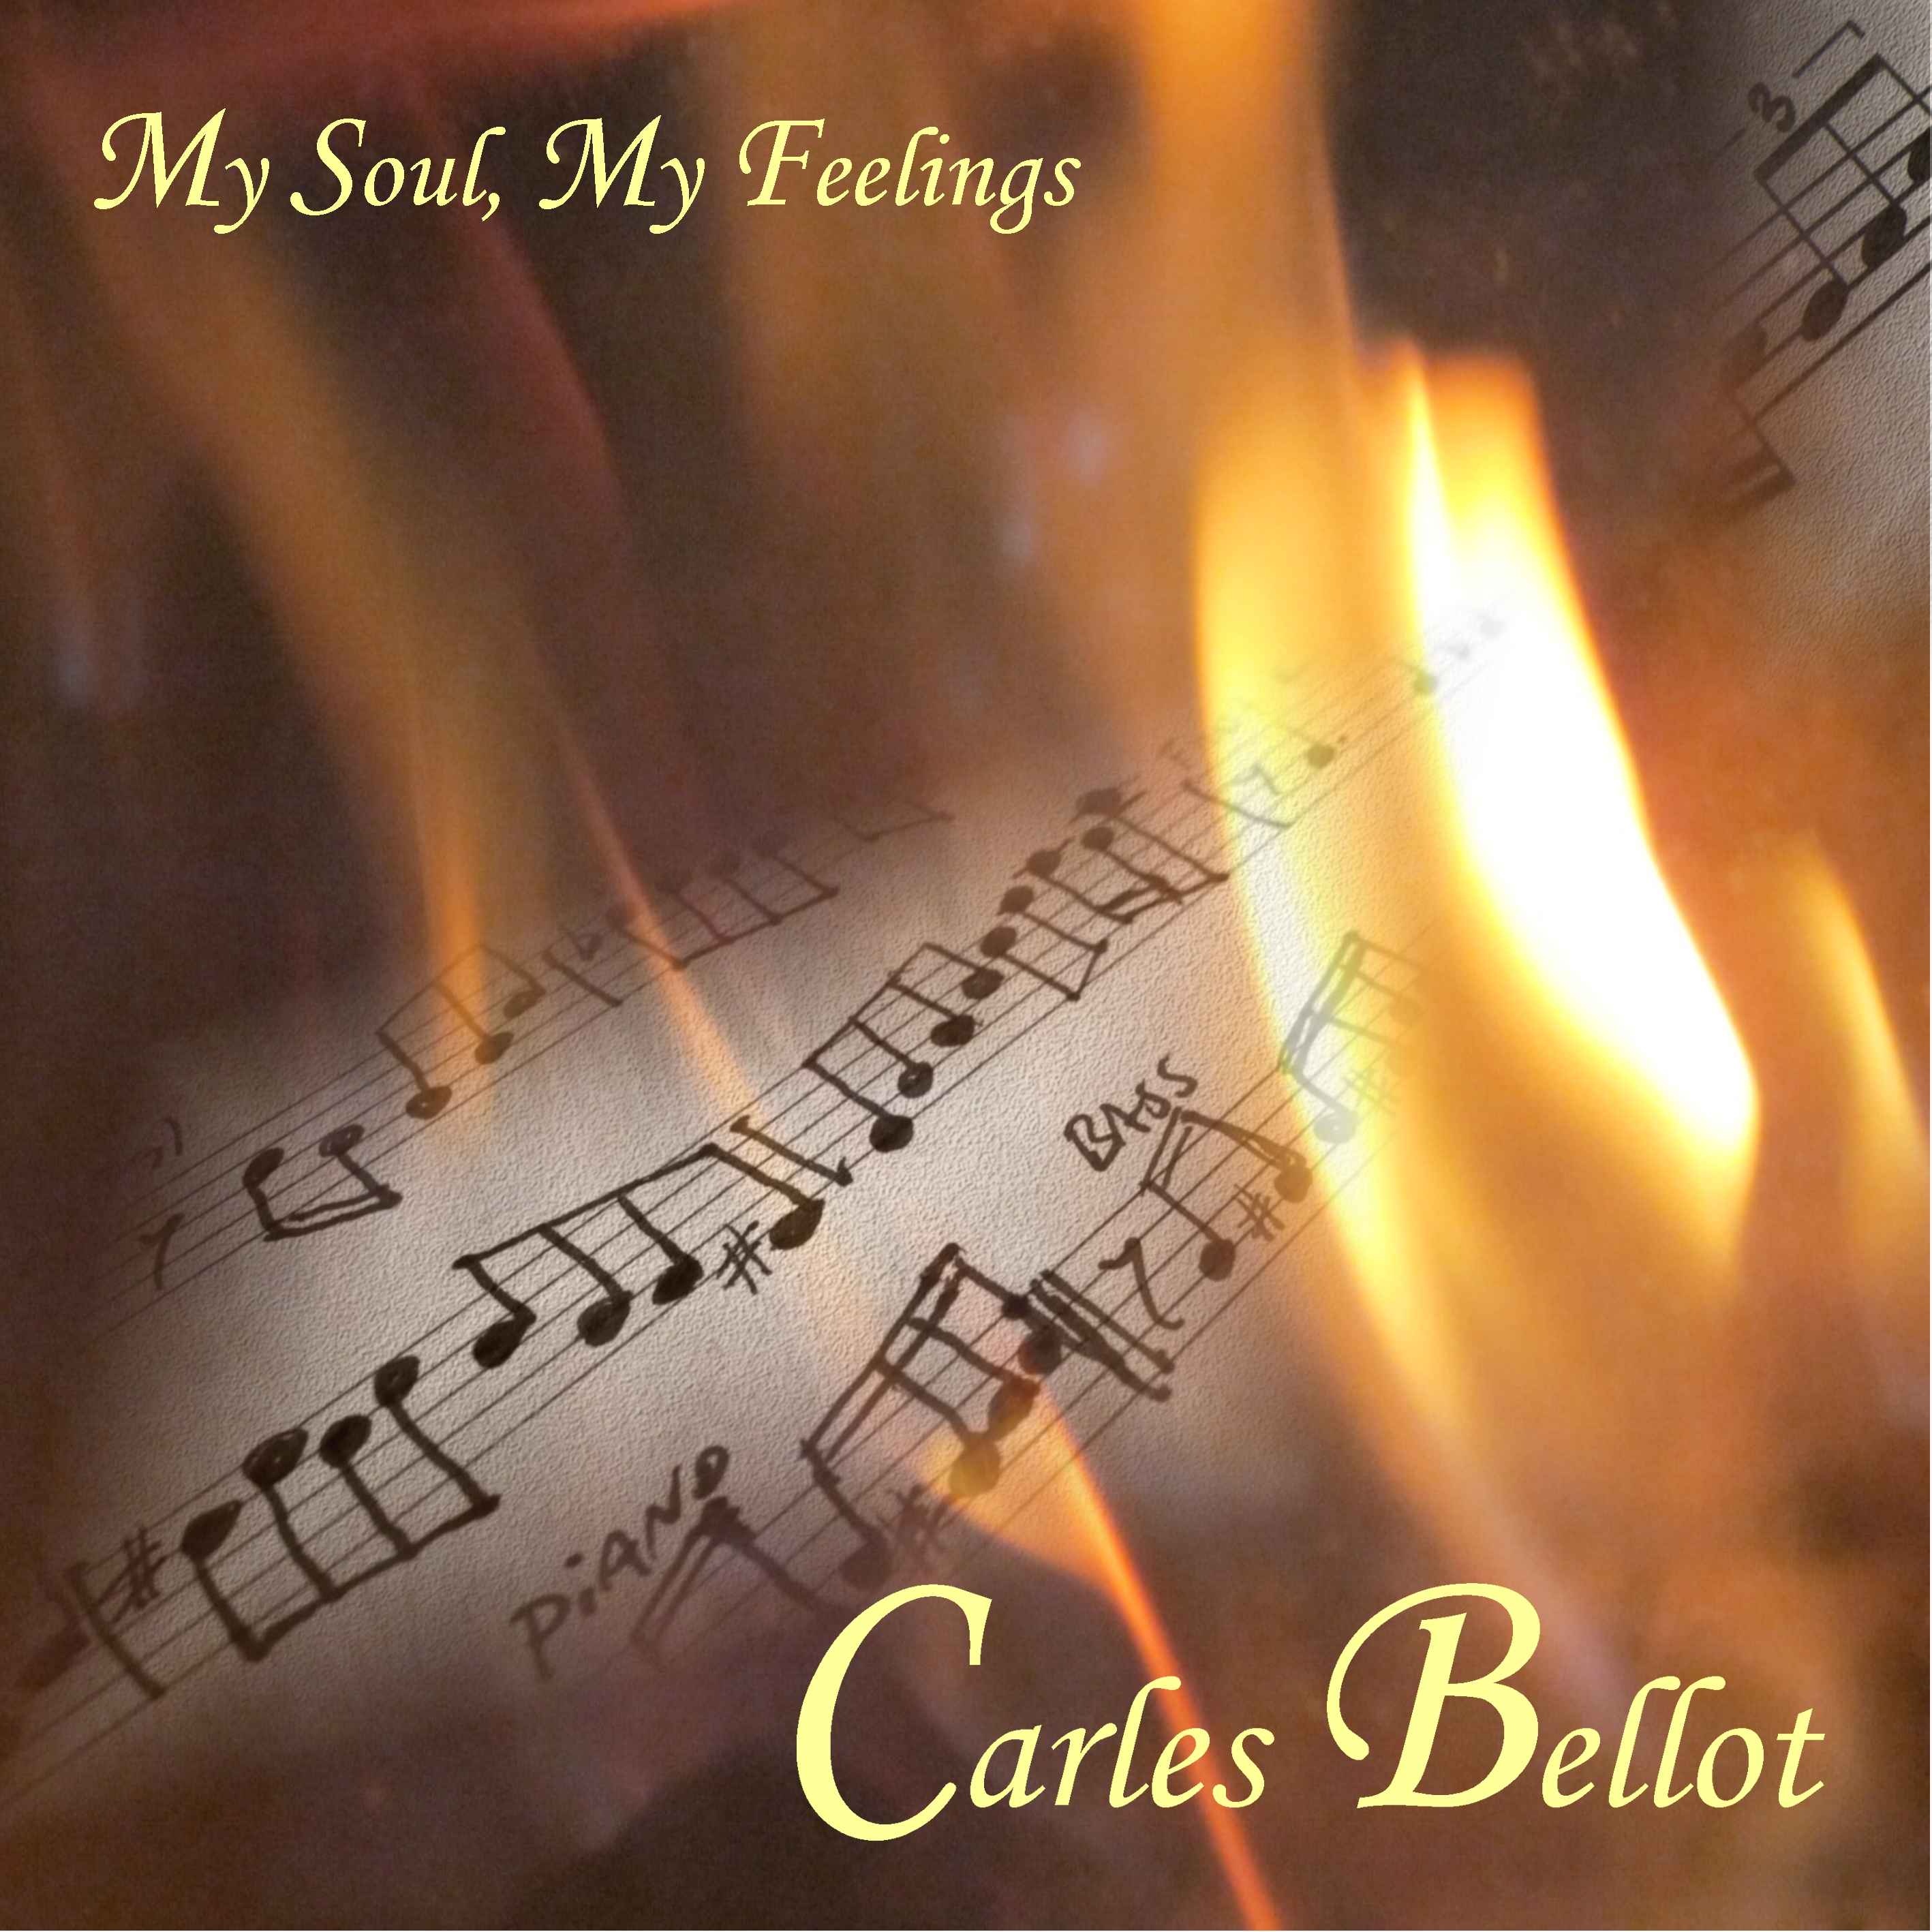 My Soul, My Feelings by Carles Bellot